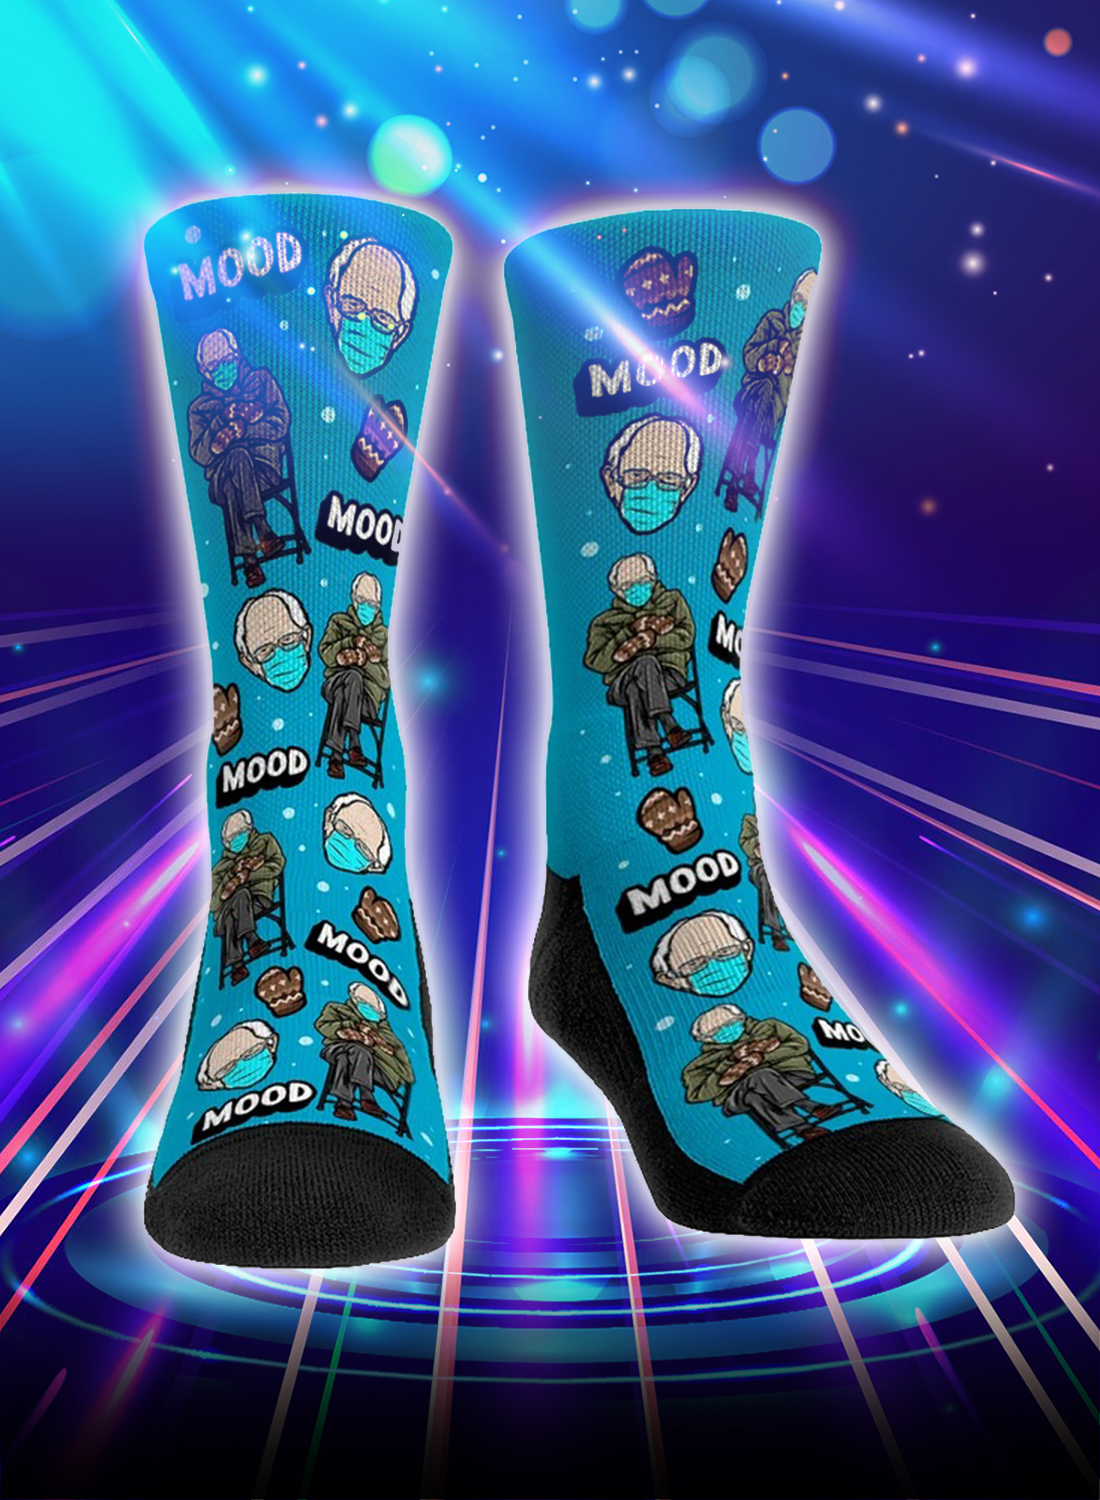 Bernie sanders inauguration meme socks